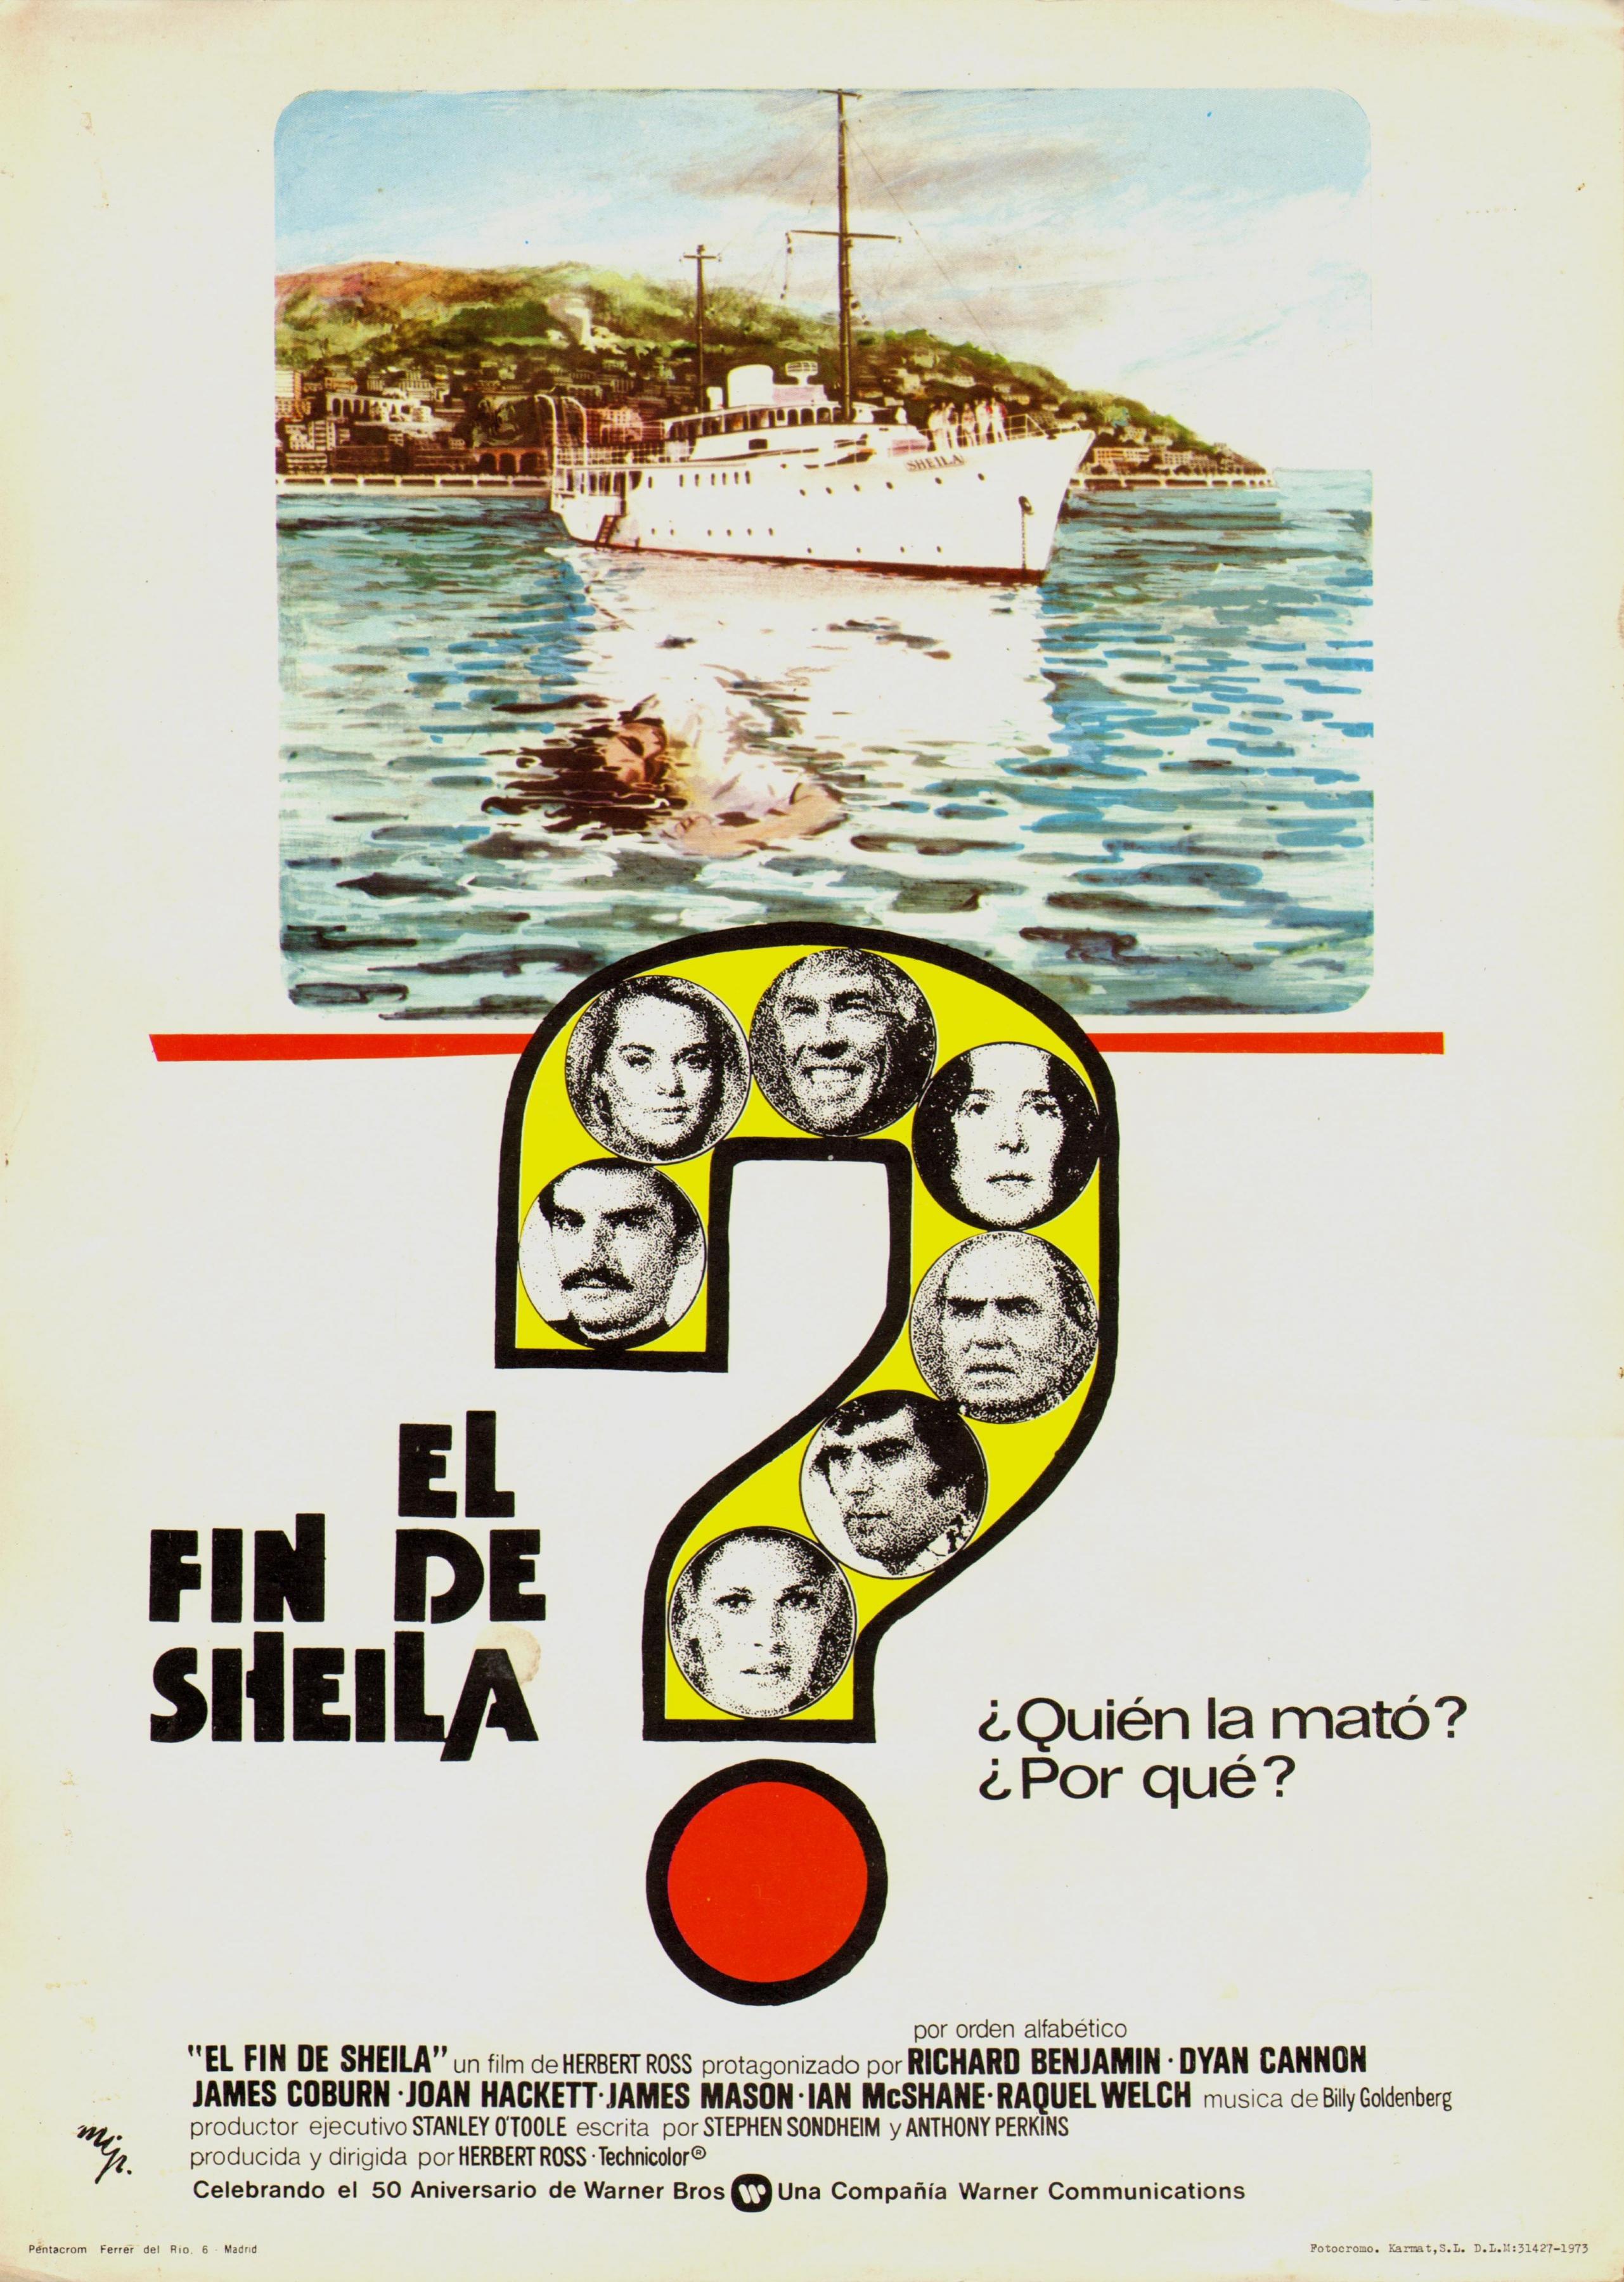 Постер фильма Последний круиз на яхте «Шейла» | Last of Sheila